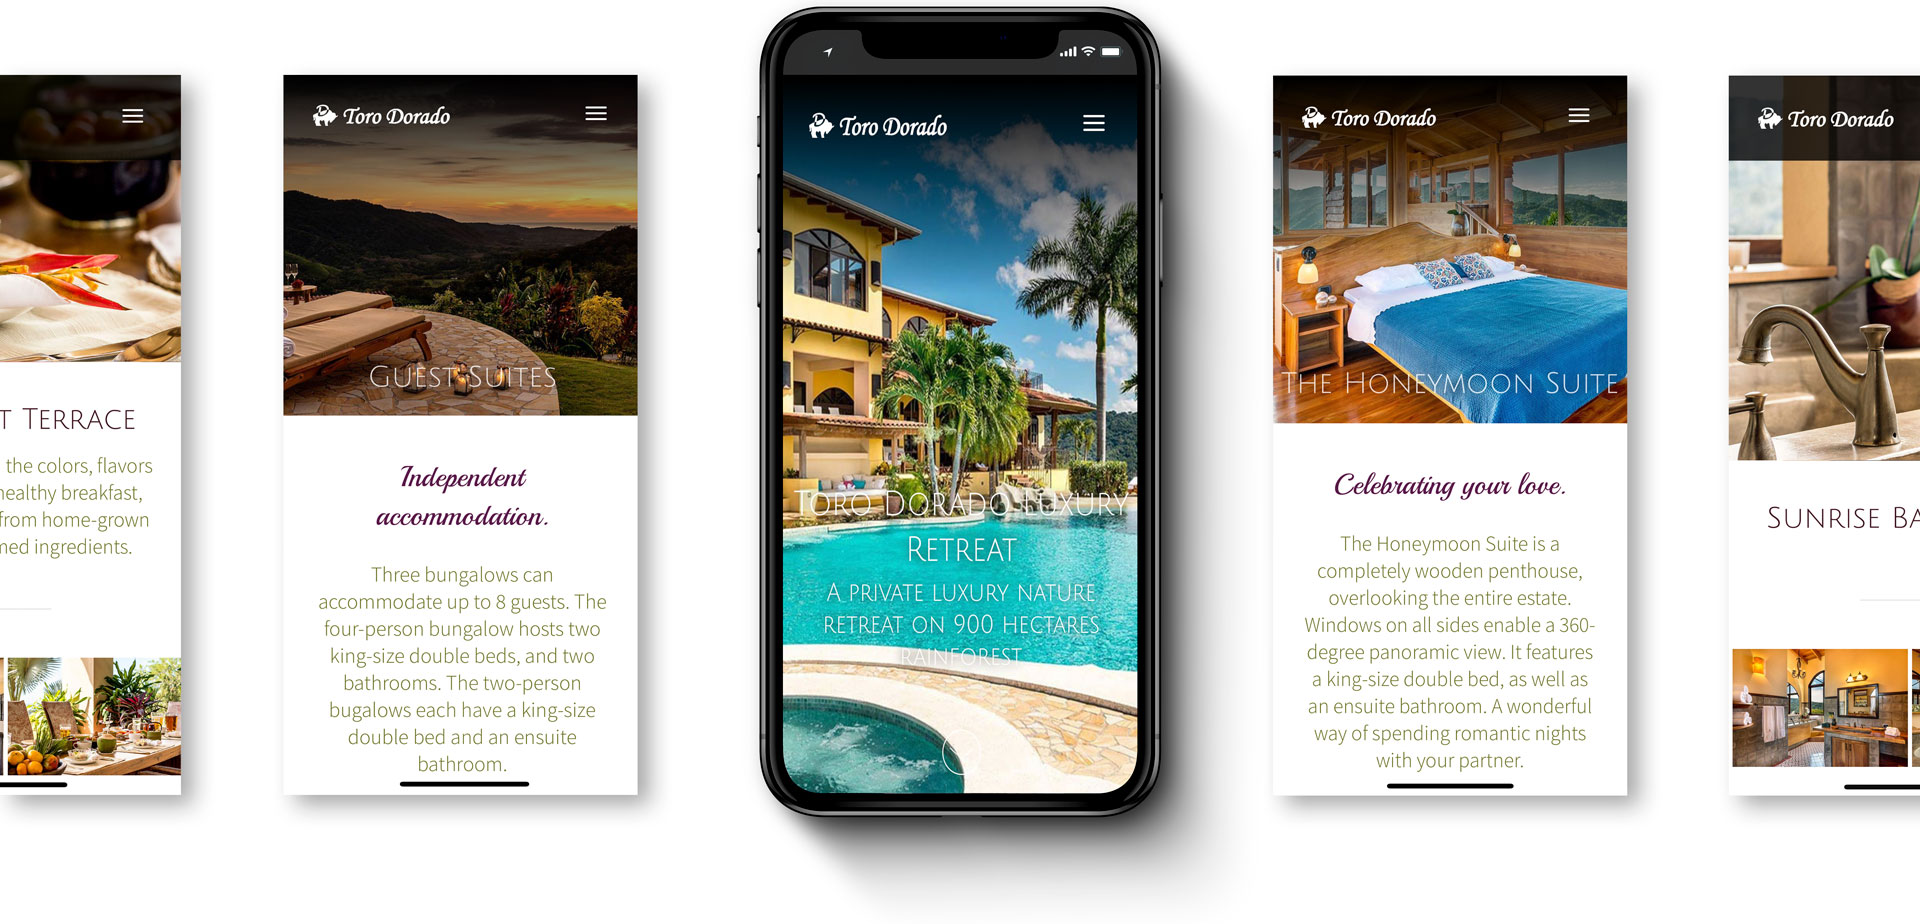 Toro dorado luxury property web design for mobile devices